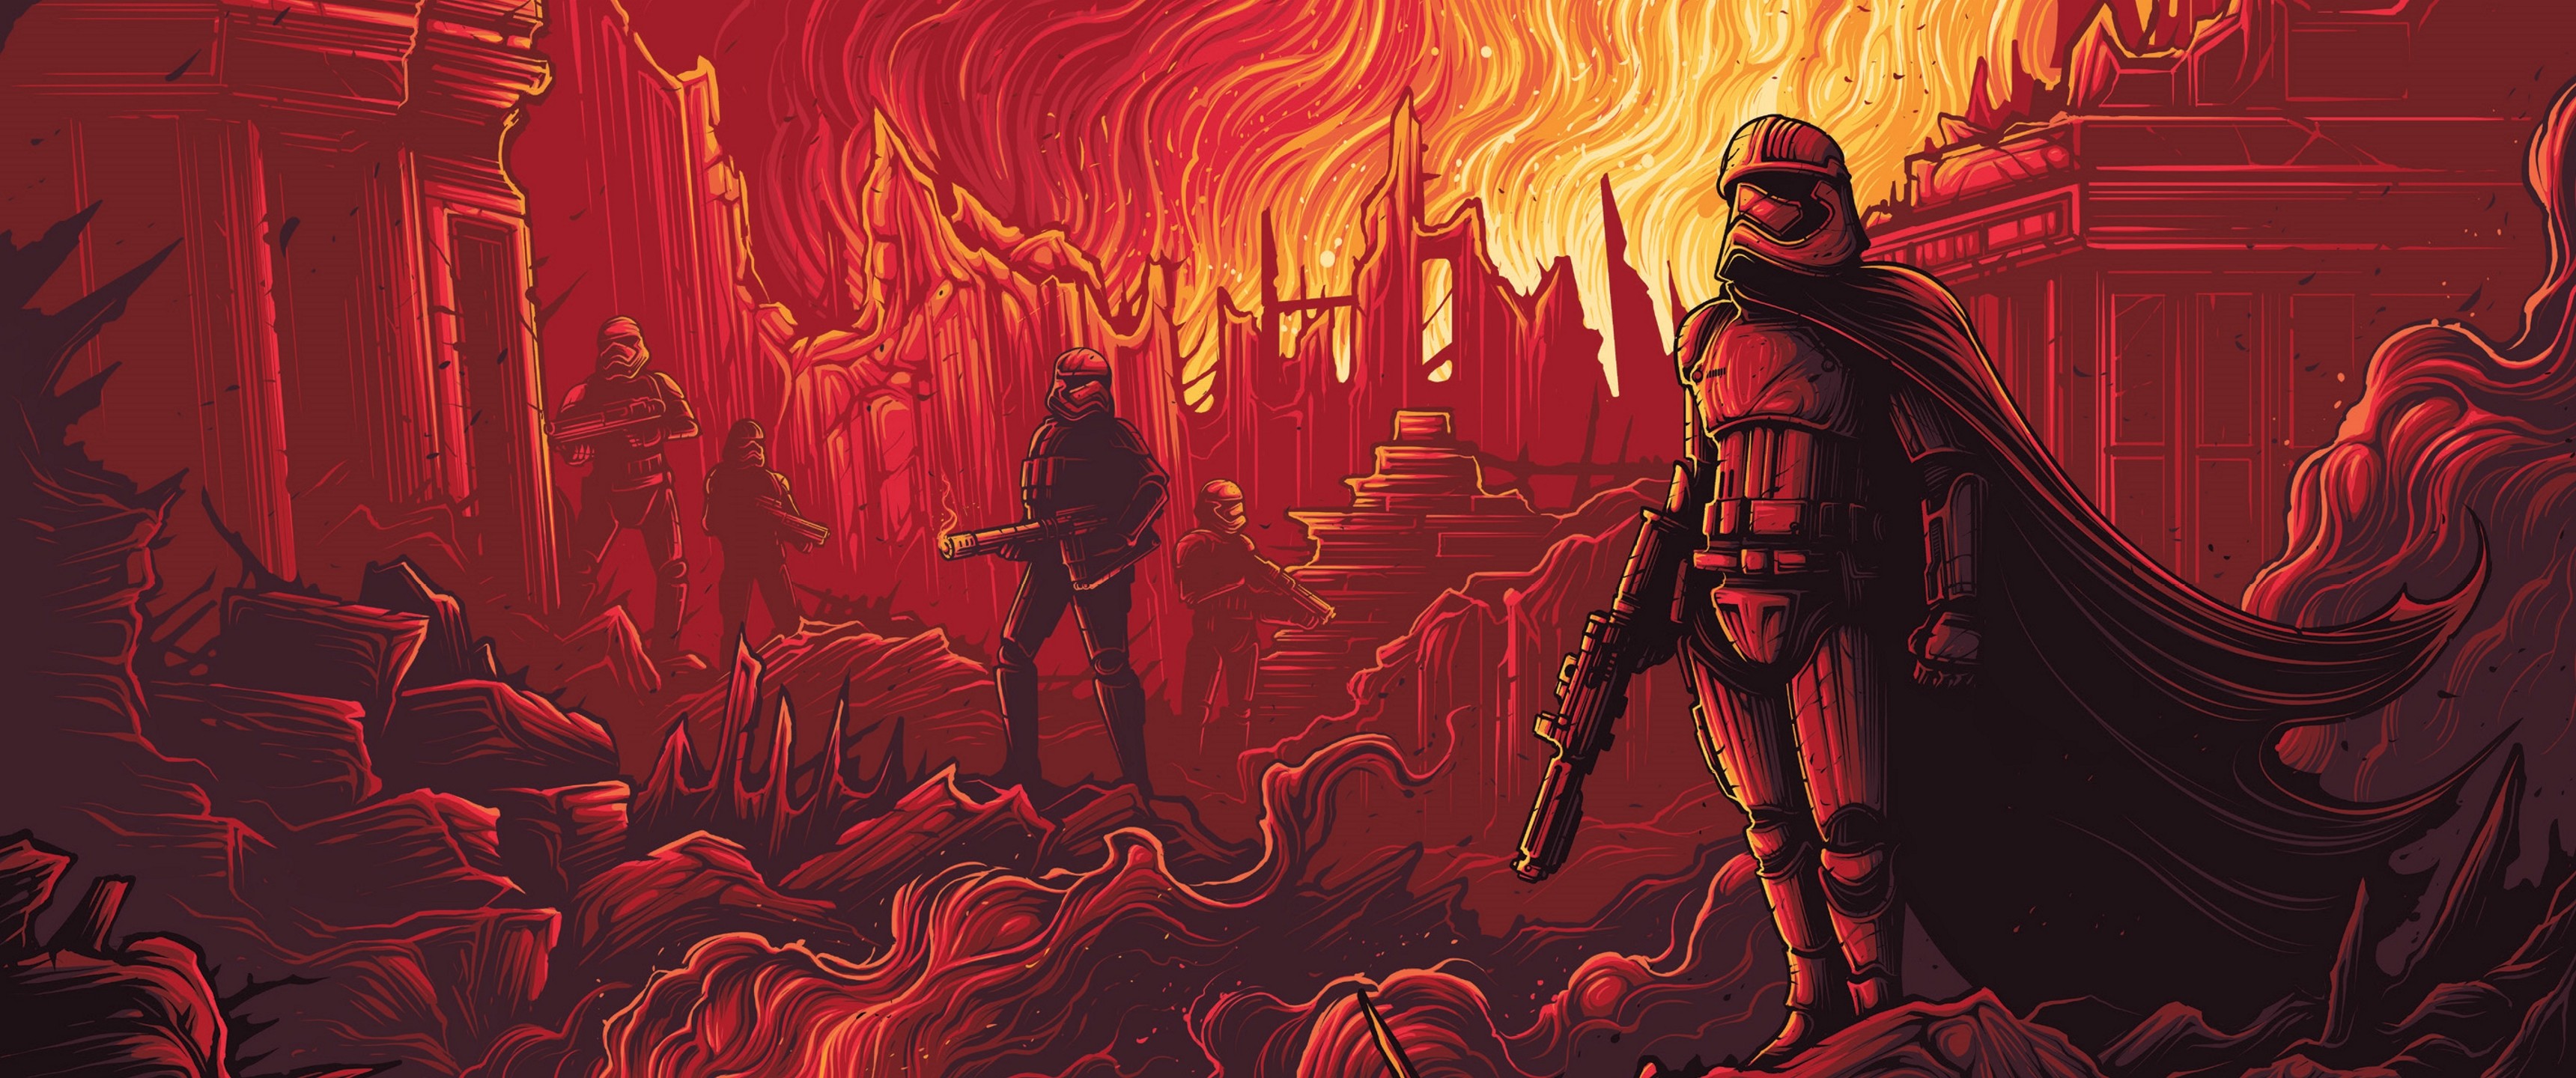 General 3440x1440 Star Wars burning Dan Mumford First Order Trooper science fiction fire artwork